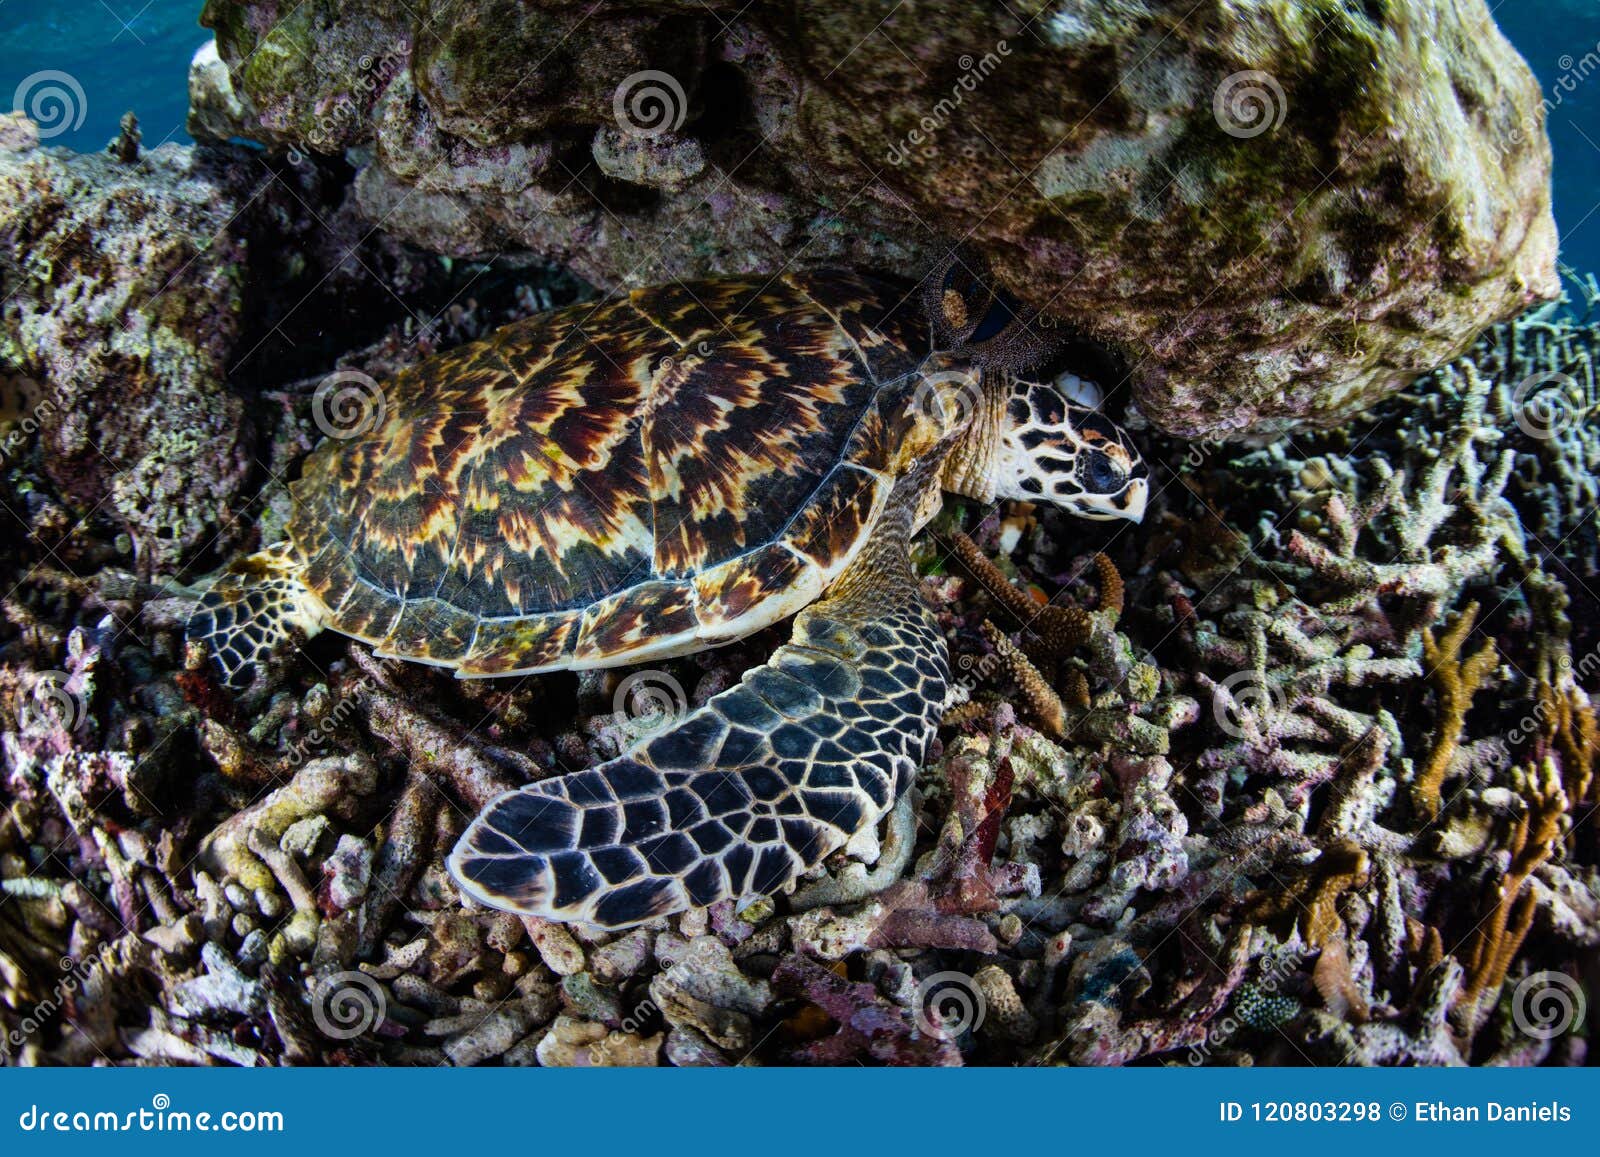 Hawksbill Sea Turtle Sleeping on Reef Stock Photo - Image of endangered